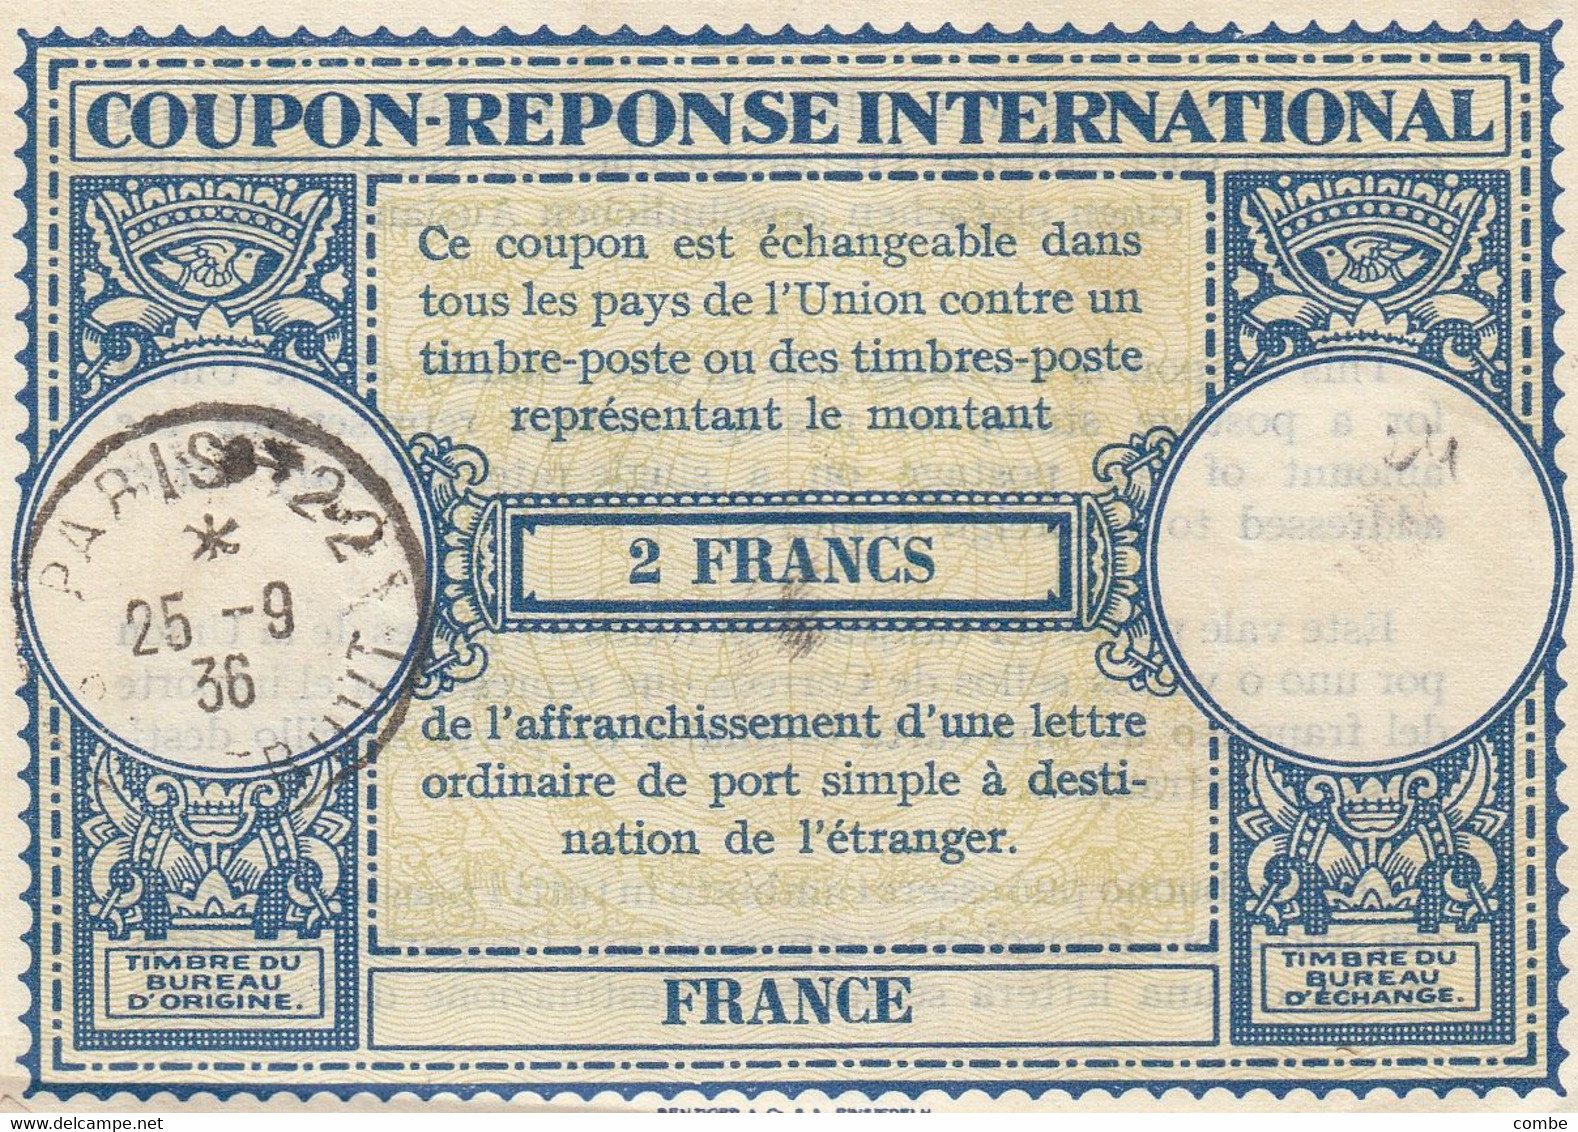 COUPON-REPONSE INTERNATIONAL. FRANCE. INTERNATIONAL REPLY. 2 FRANCS. PARIS 22 1936        /  2 - Antwortscheine